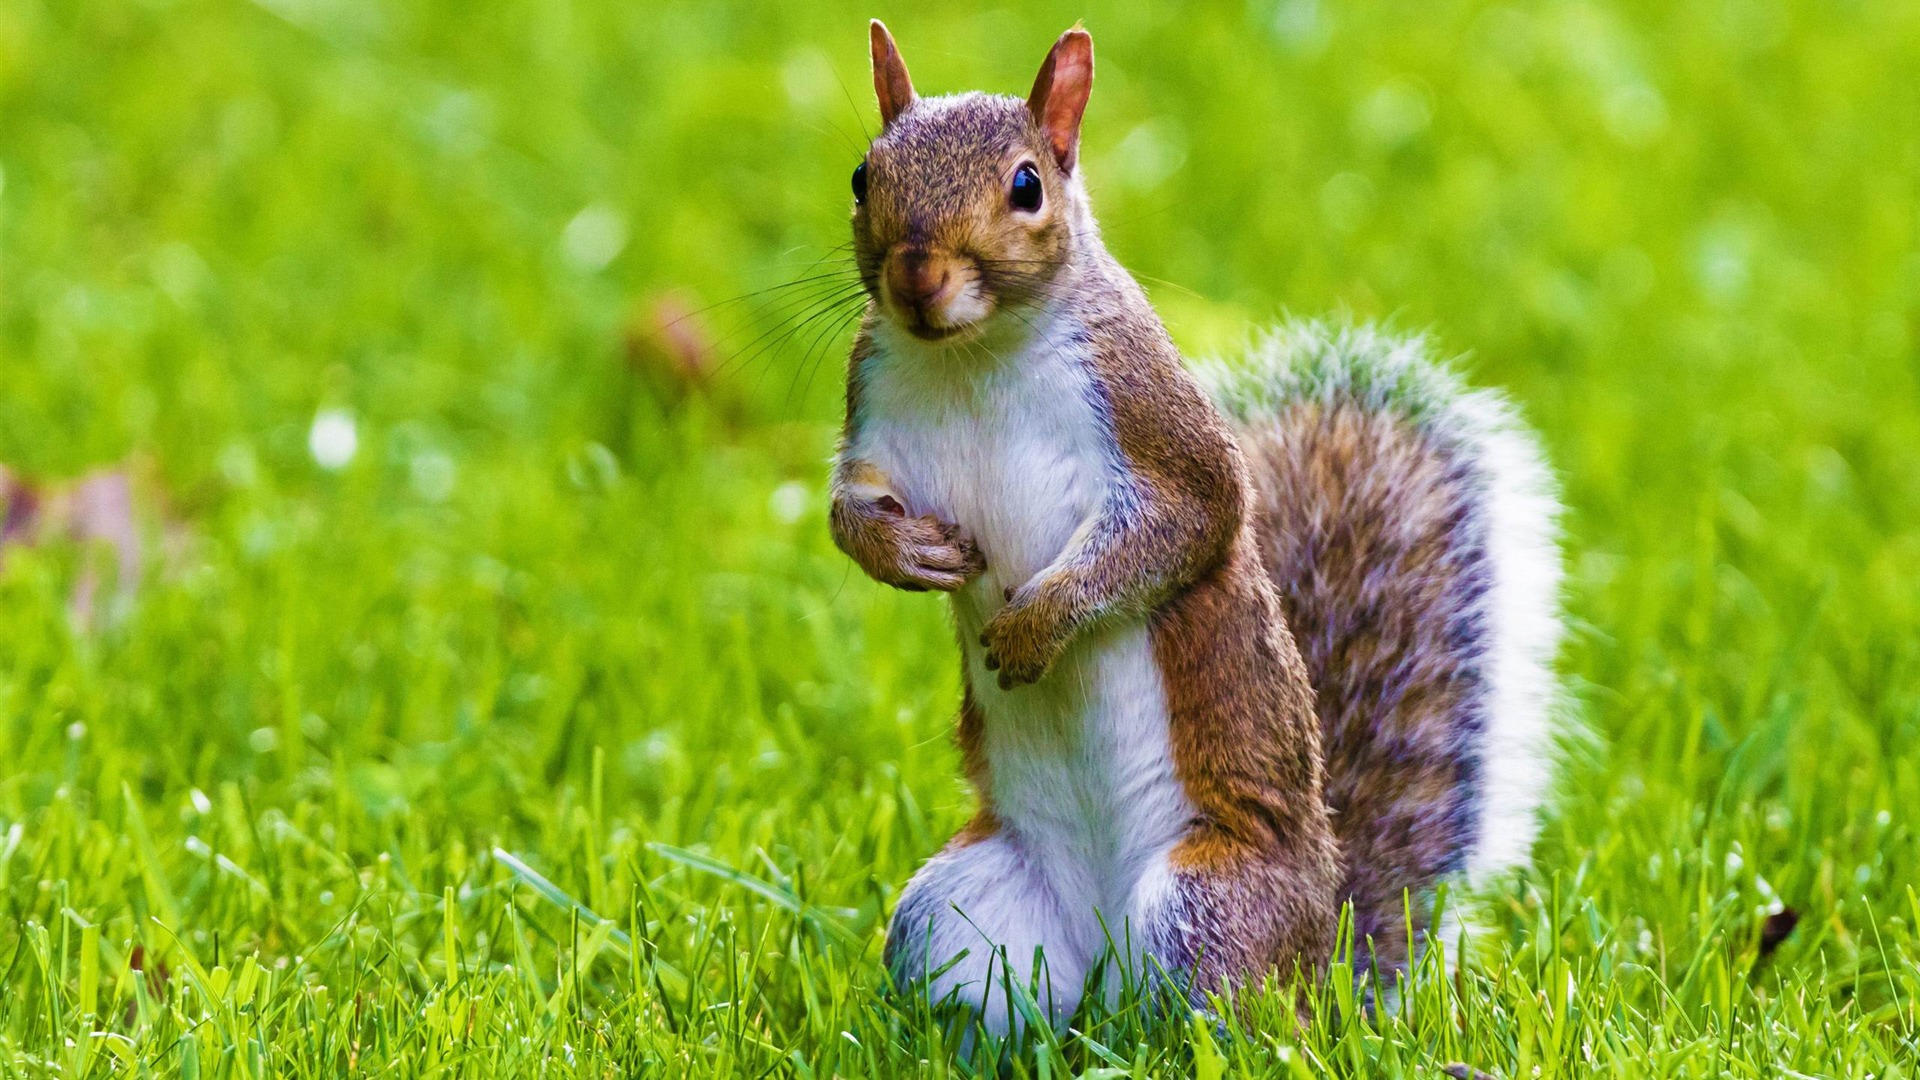 Cute Squirrel Wild Animal Desktop Wallpaper 1920x1080. Cute Animal